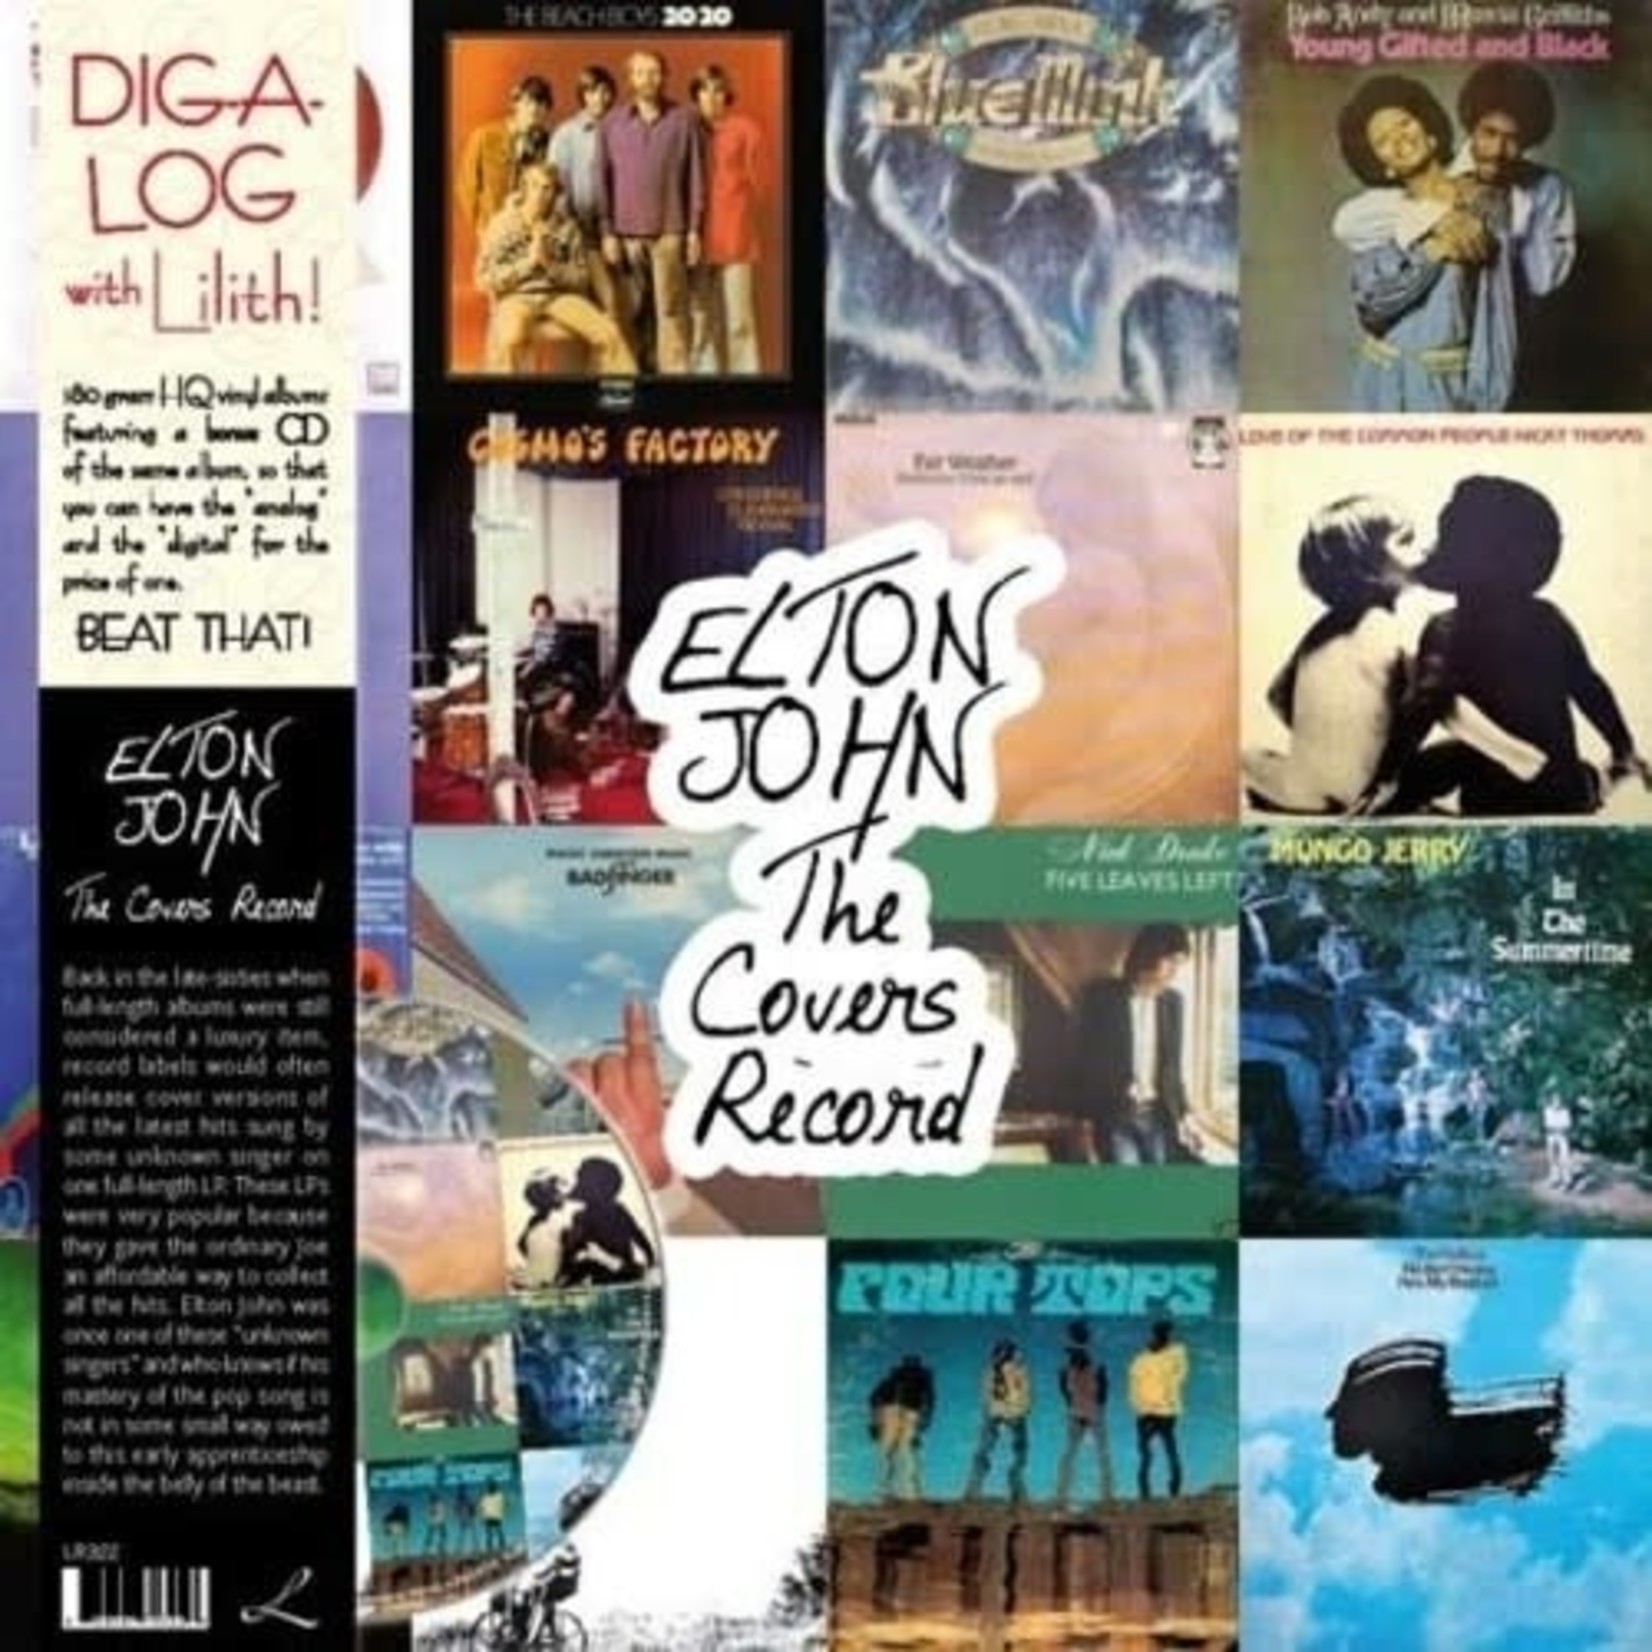 Lilith Elton John - The Covers Record (LP+CD)